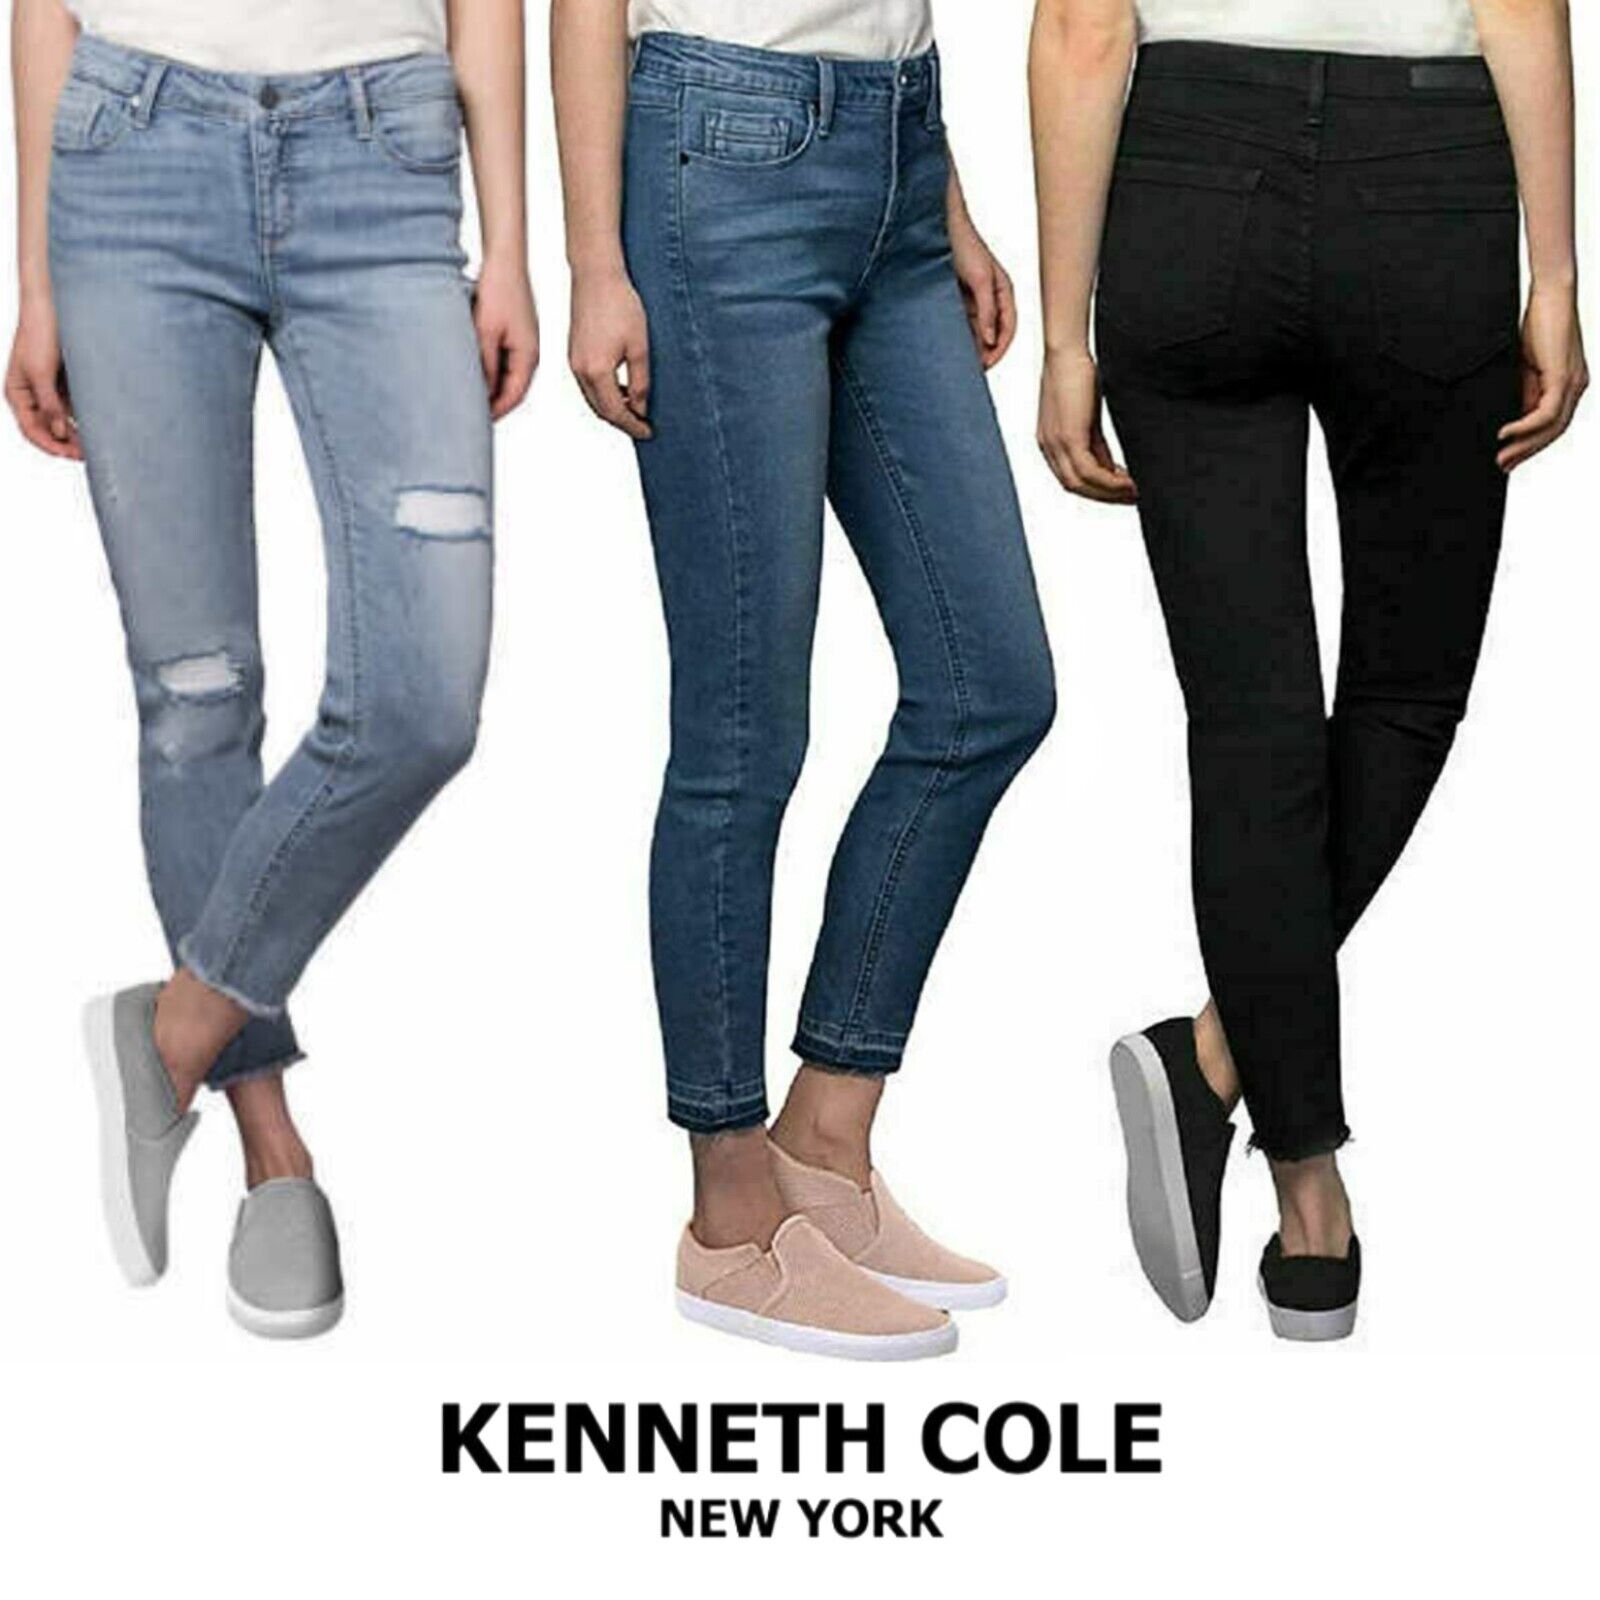 Kenneth Cole Jess Skinny Jean Pant Mid-rise Slim Fit No Hem Variety - New!